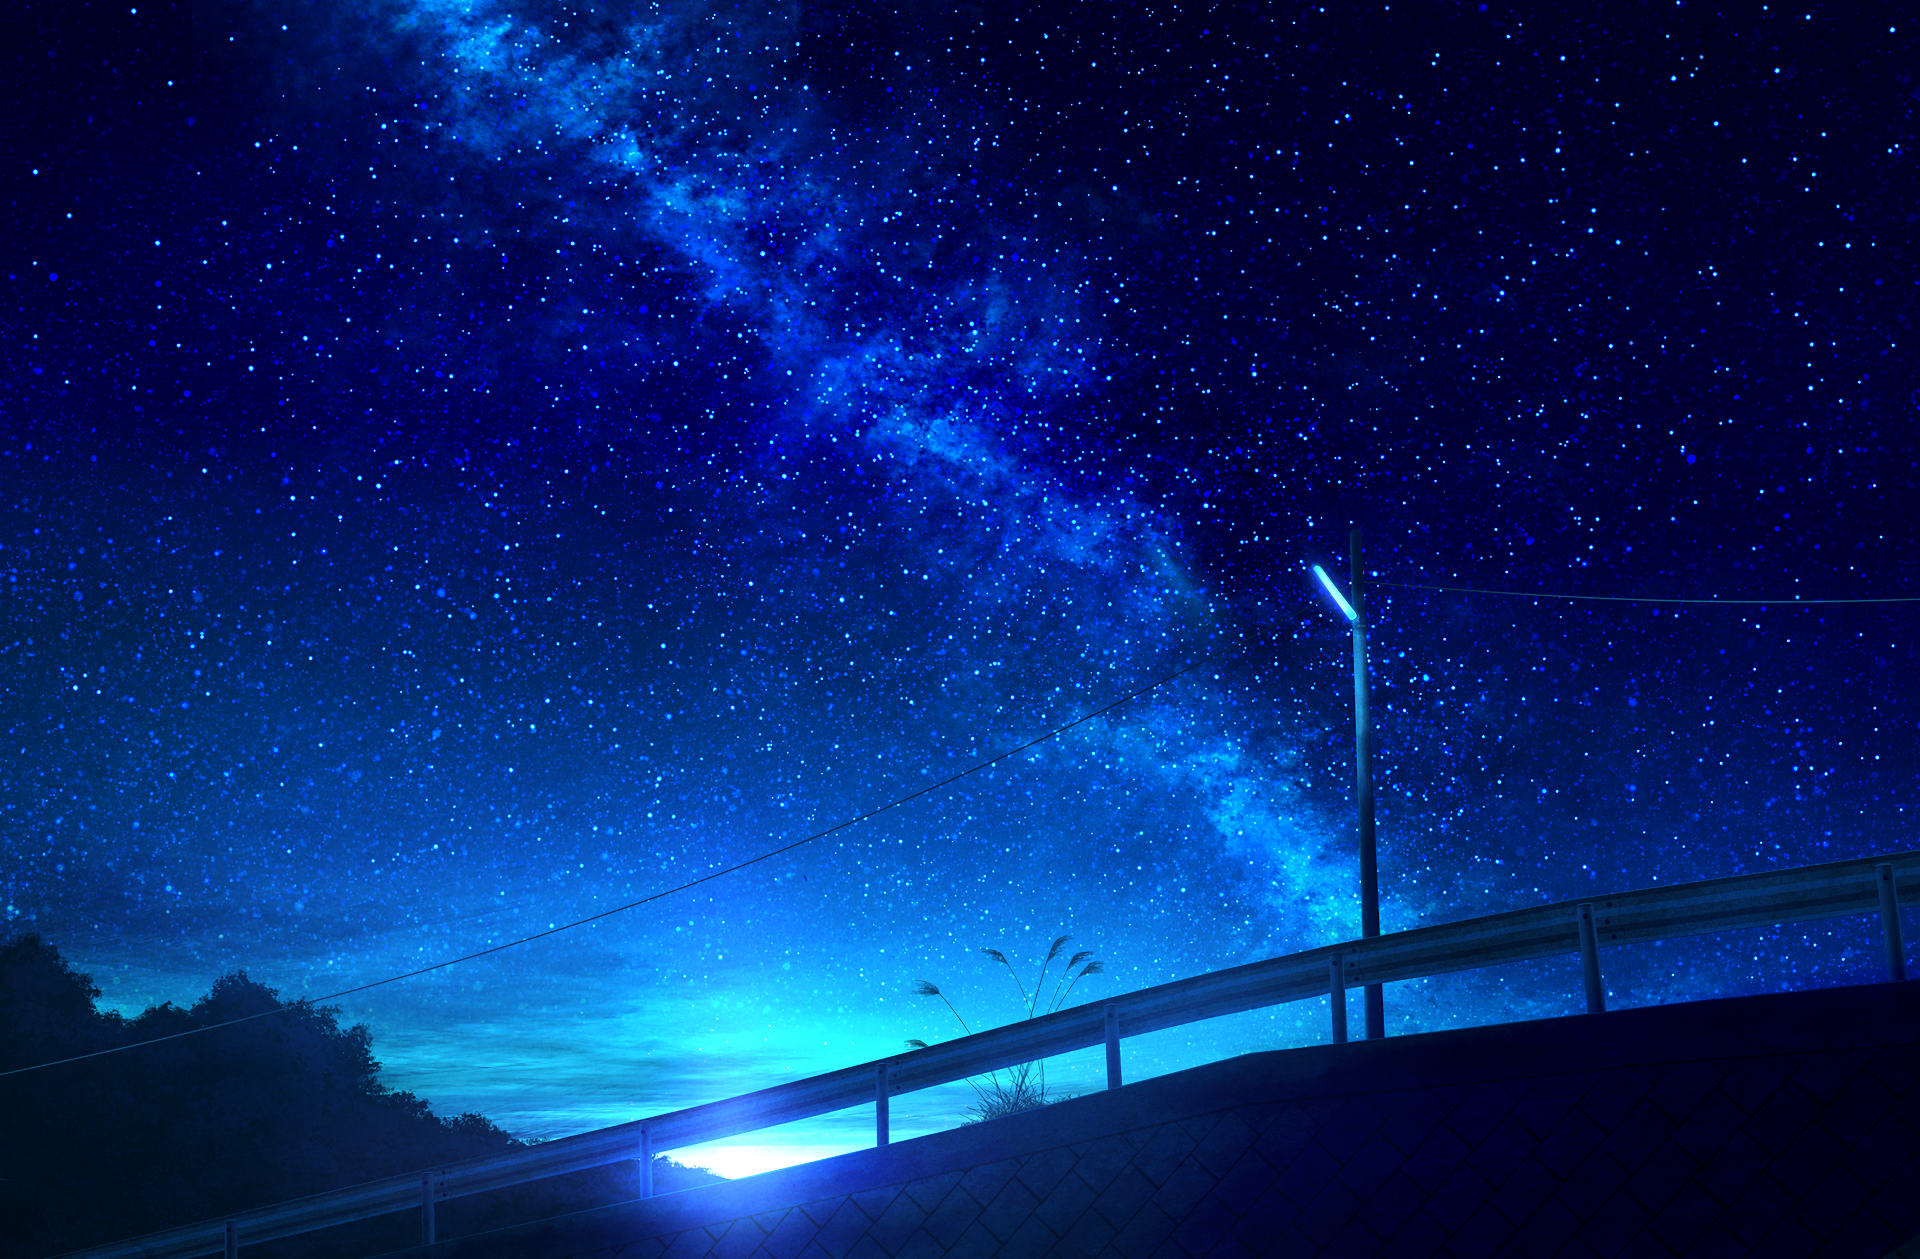 Anime Wallpaper Night Sky Galaxy. Anime scenery